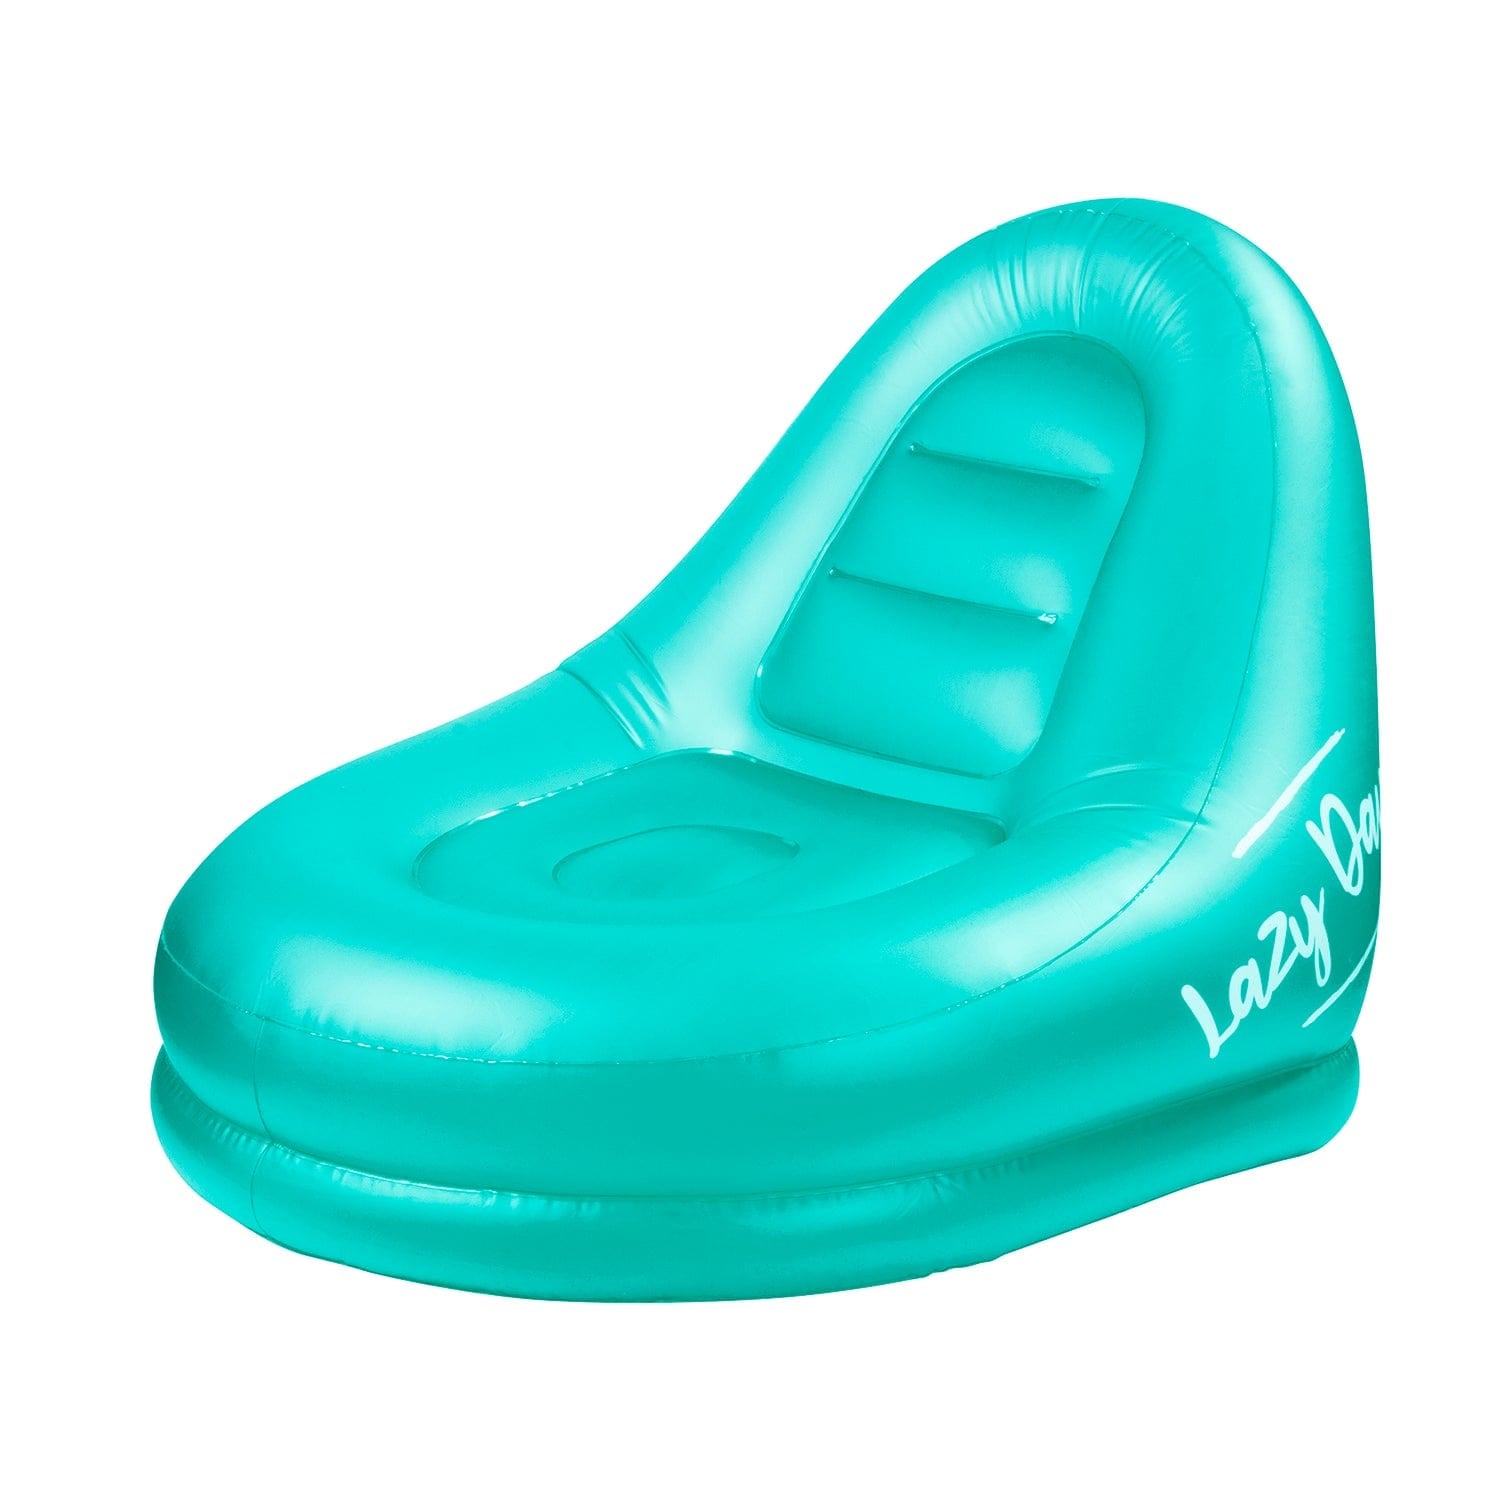 Lazy Dayz Jumbo Inflatable Chair - Teal